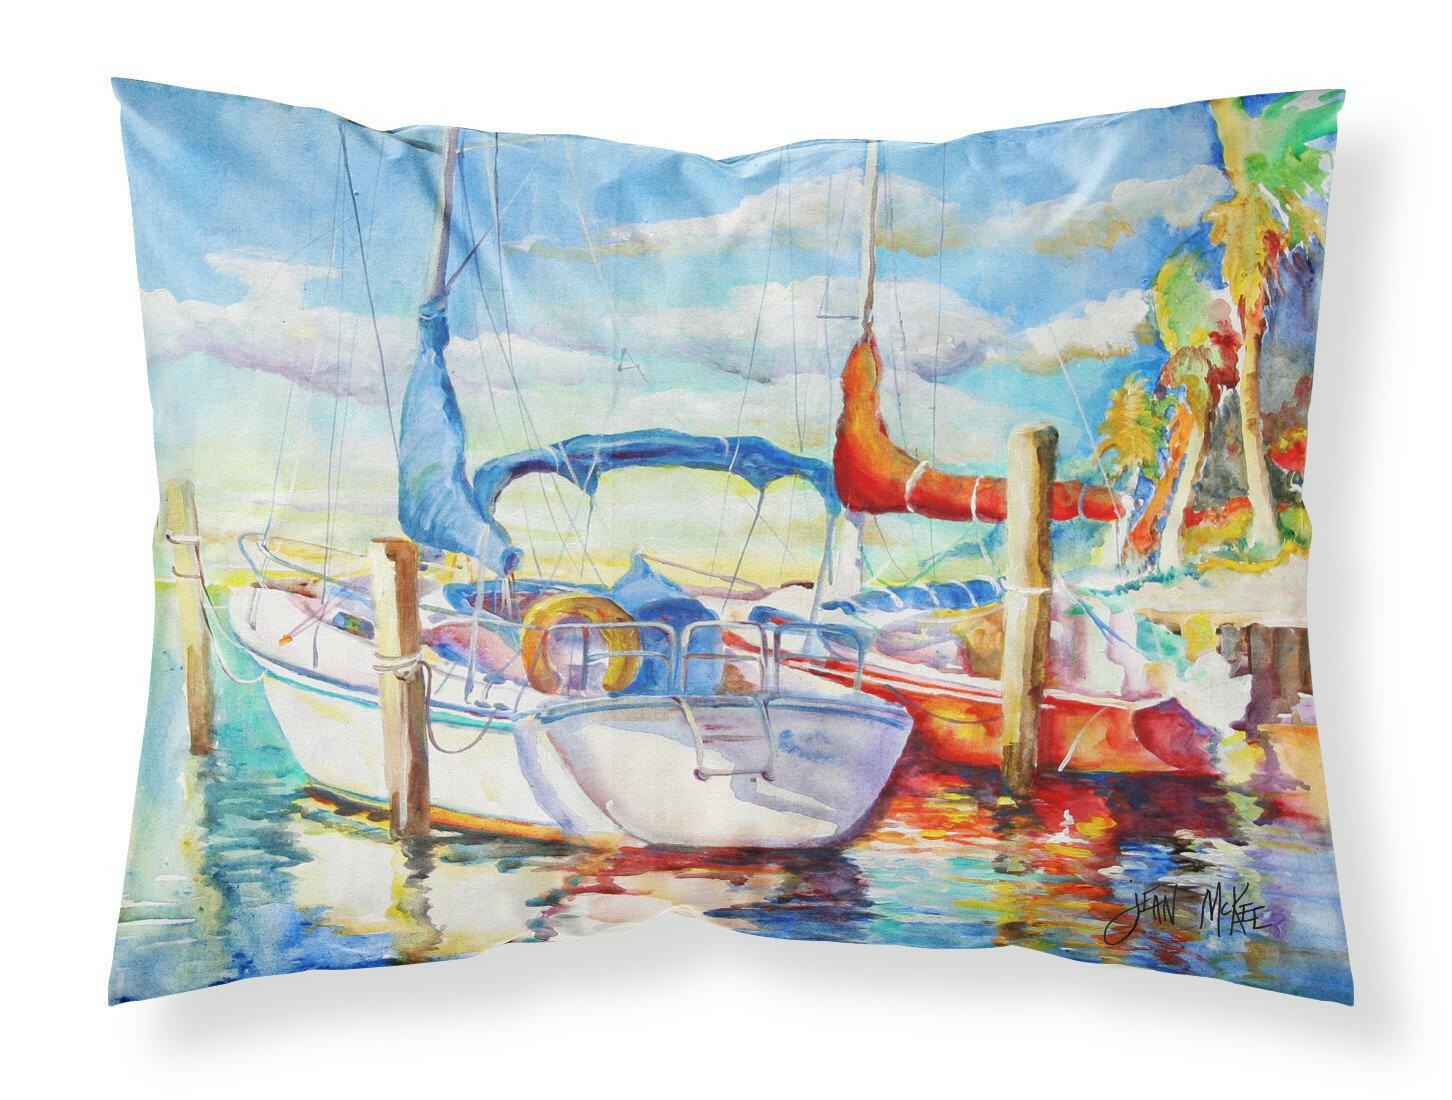 Towering Q Sailboat Fabric Standard Pillowcase JMK1088PILLOWCASE by Caroline's Treasures